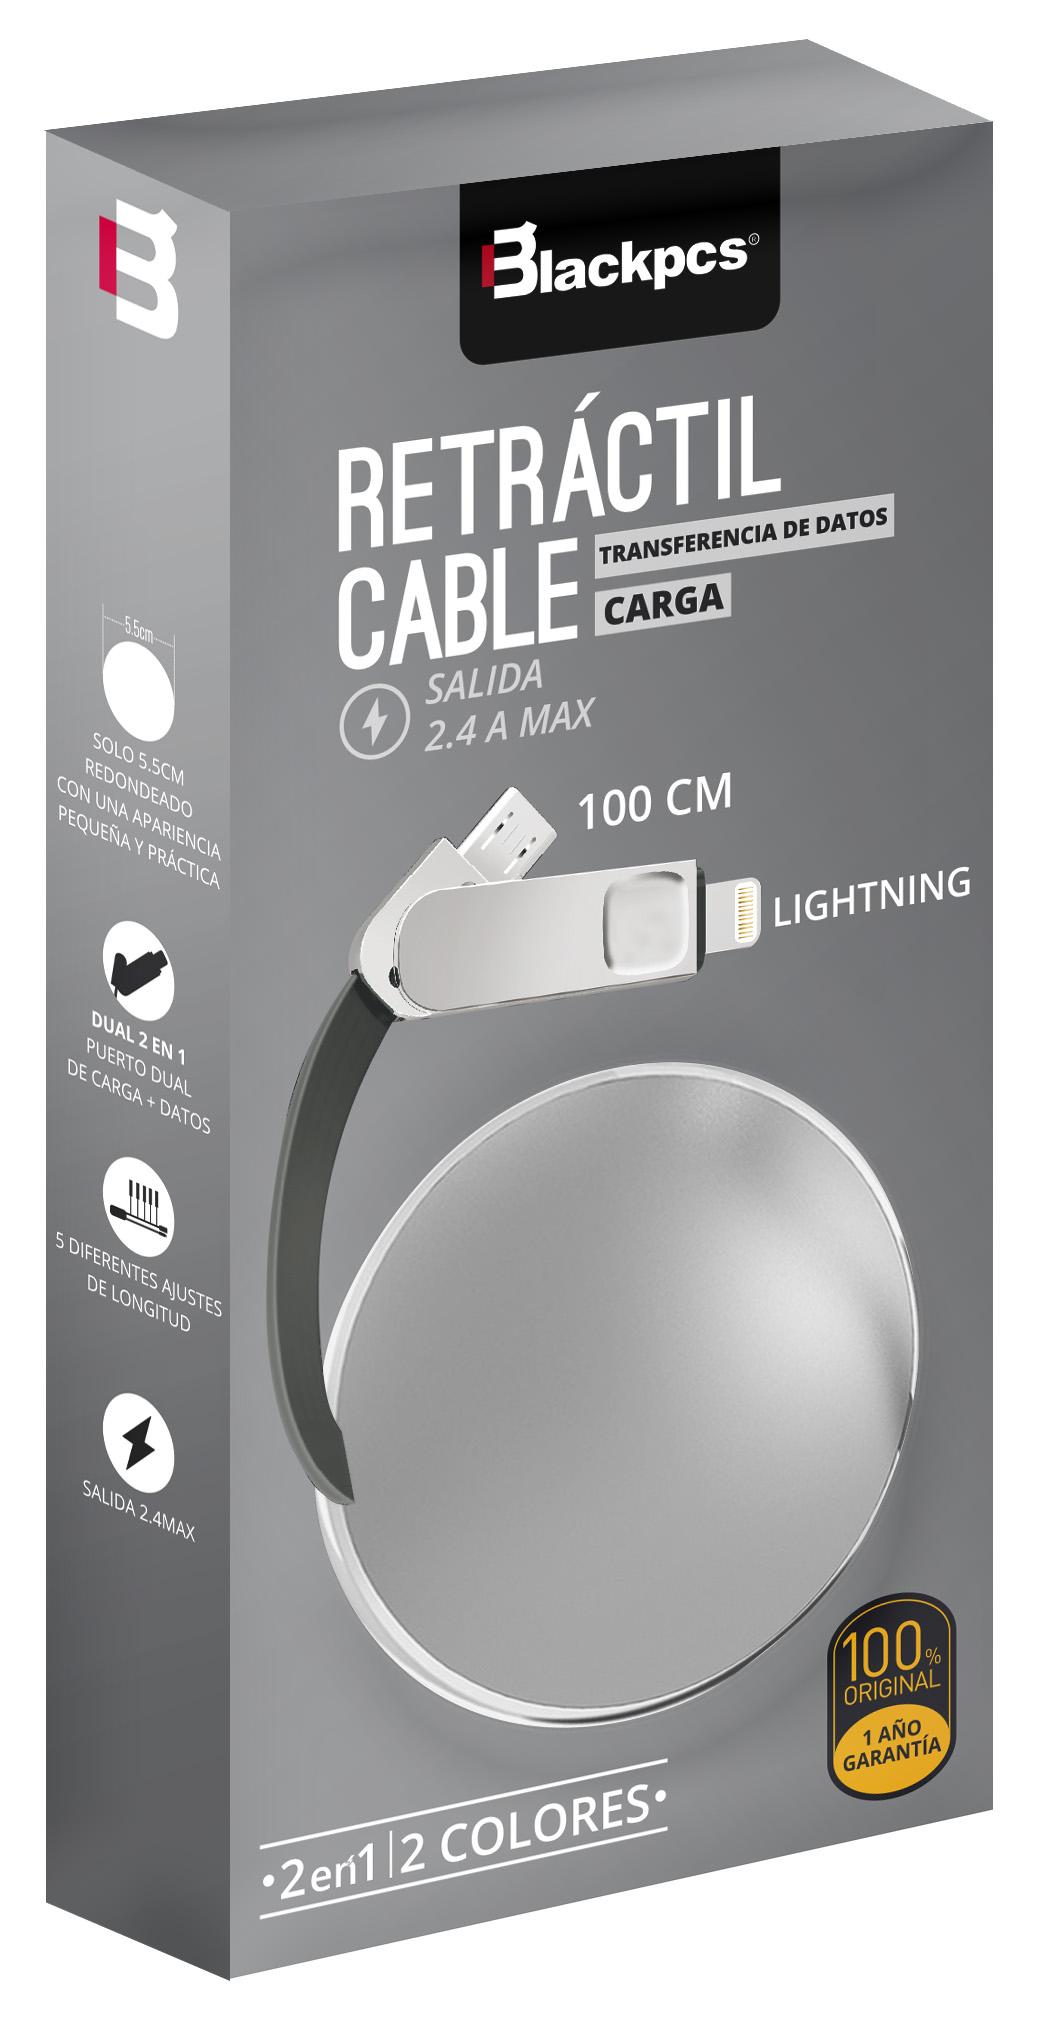 Cable Blackpcs  Ca Retractil  V8 Lightning Plata 100 Cm 2 1A  Casmlpr  - CASMLPR-3